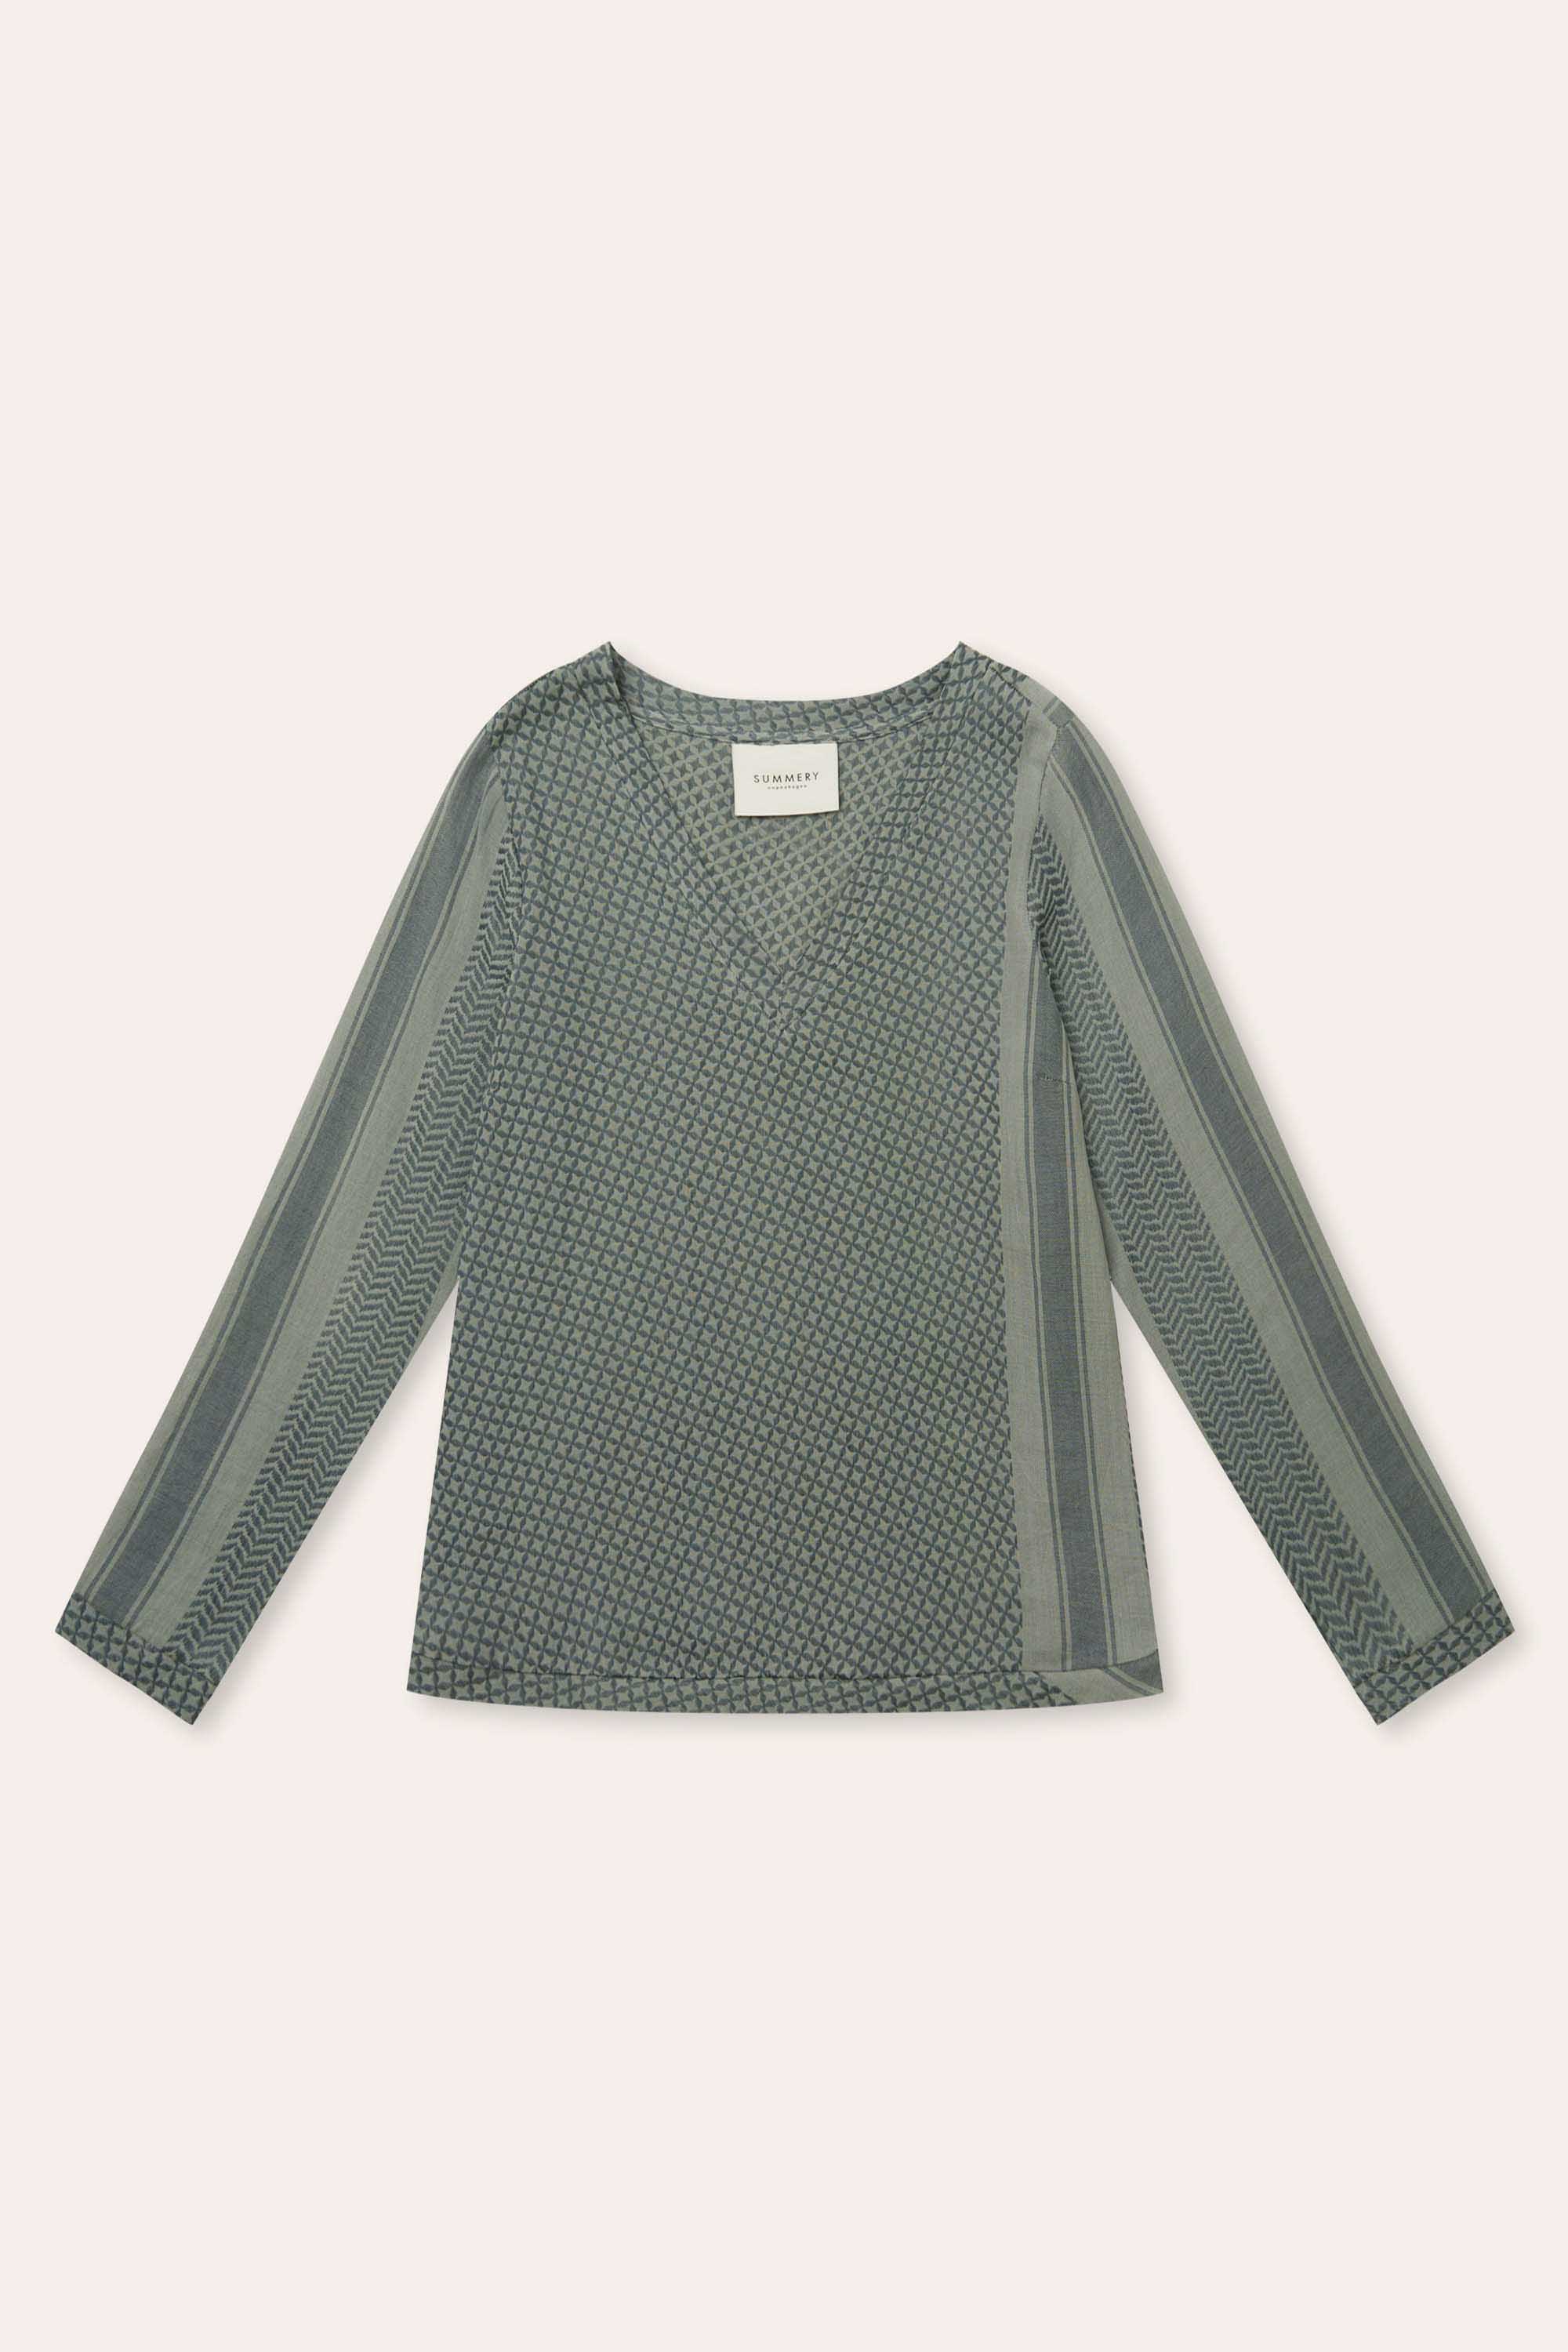 SUMMERY Copenhagen Shirt V Long Sleeves Blouse 564 Charcoal Grey